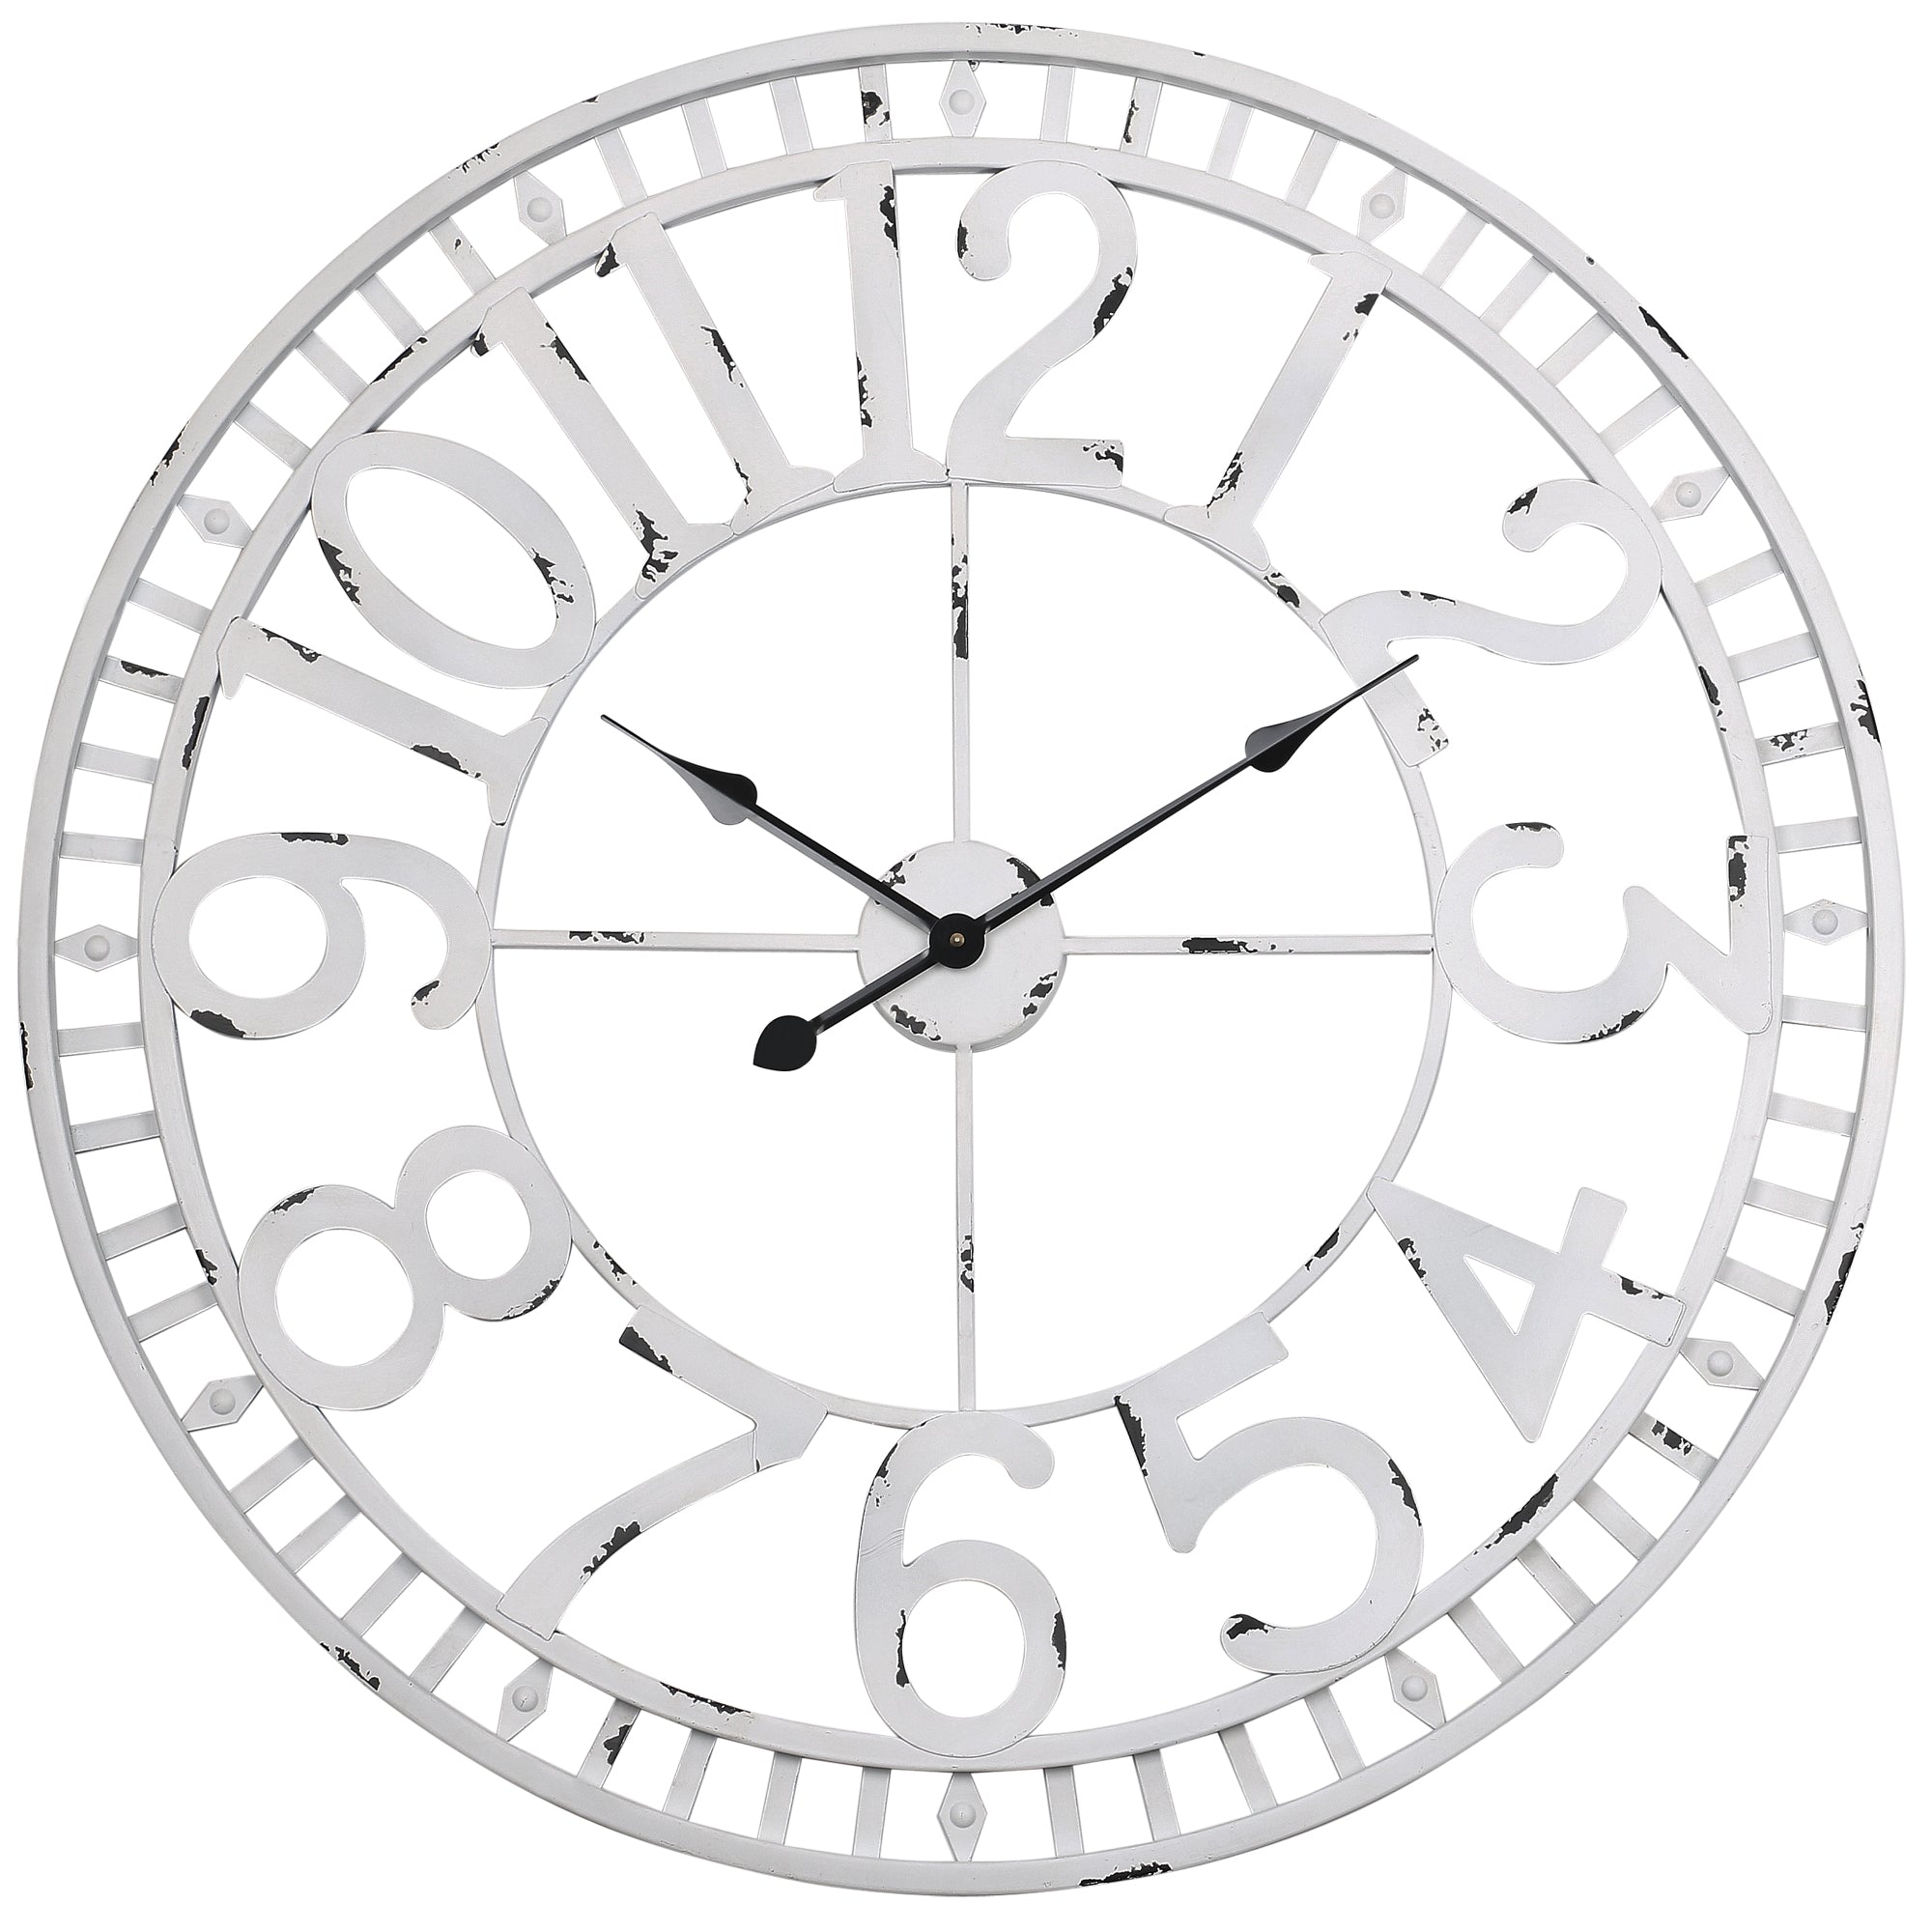 Loft97 CL23WW Manhattan Industrial Wall Clock, Analog, White, 32